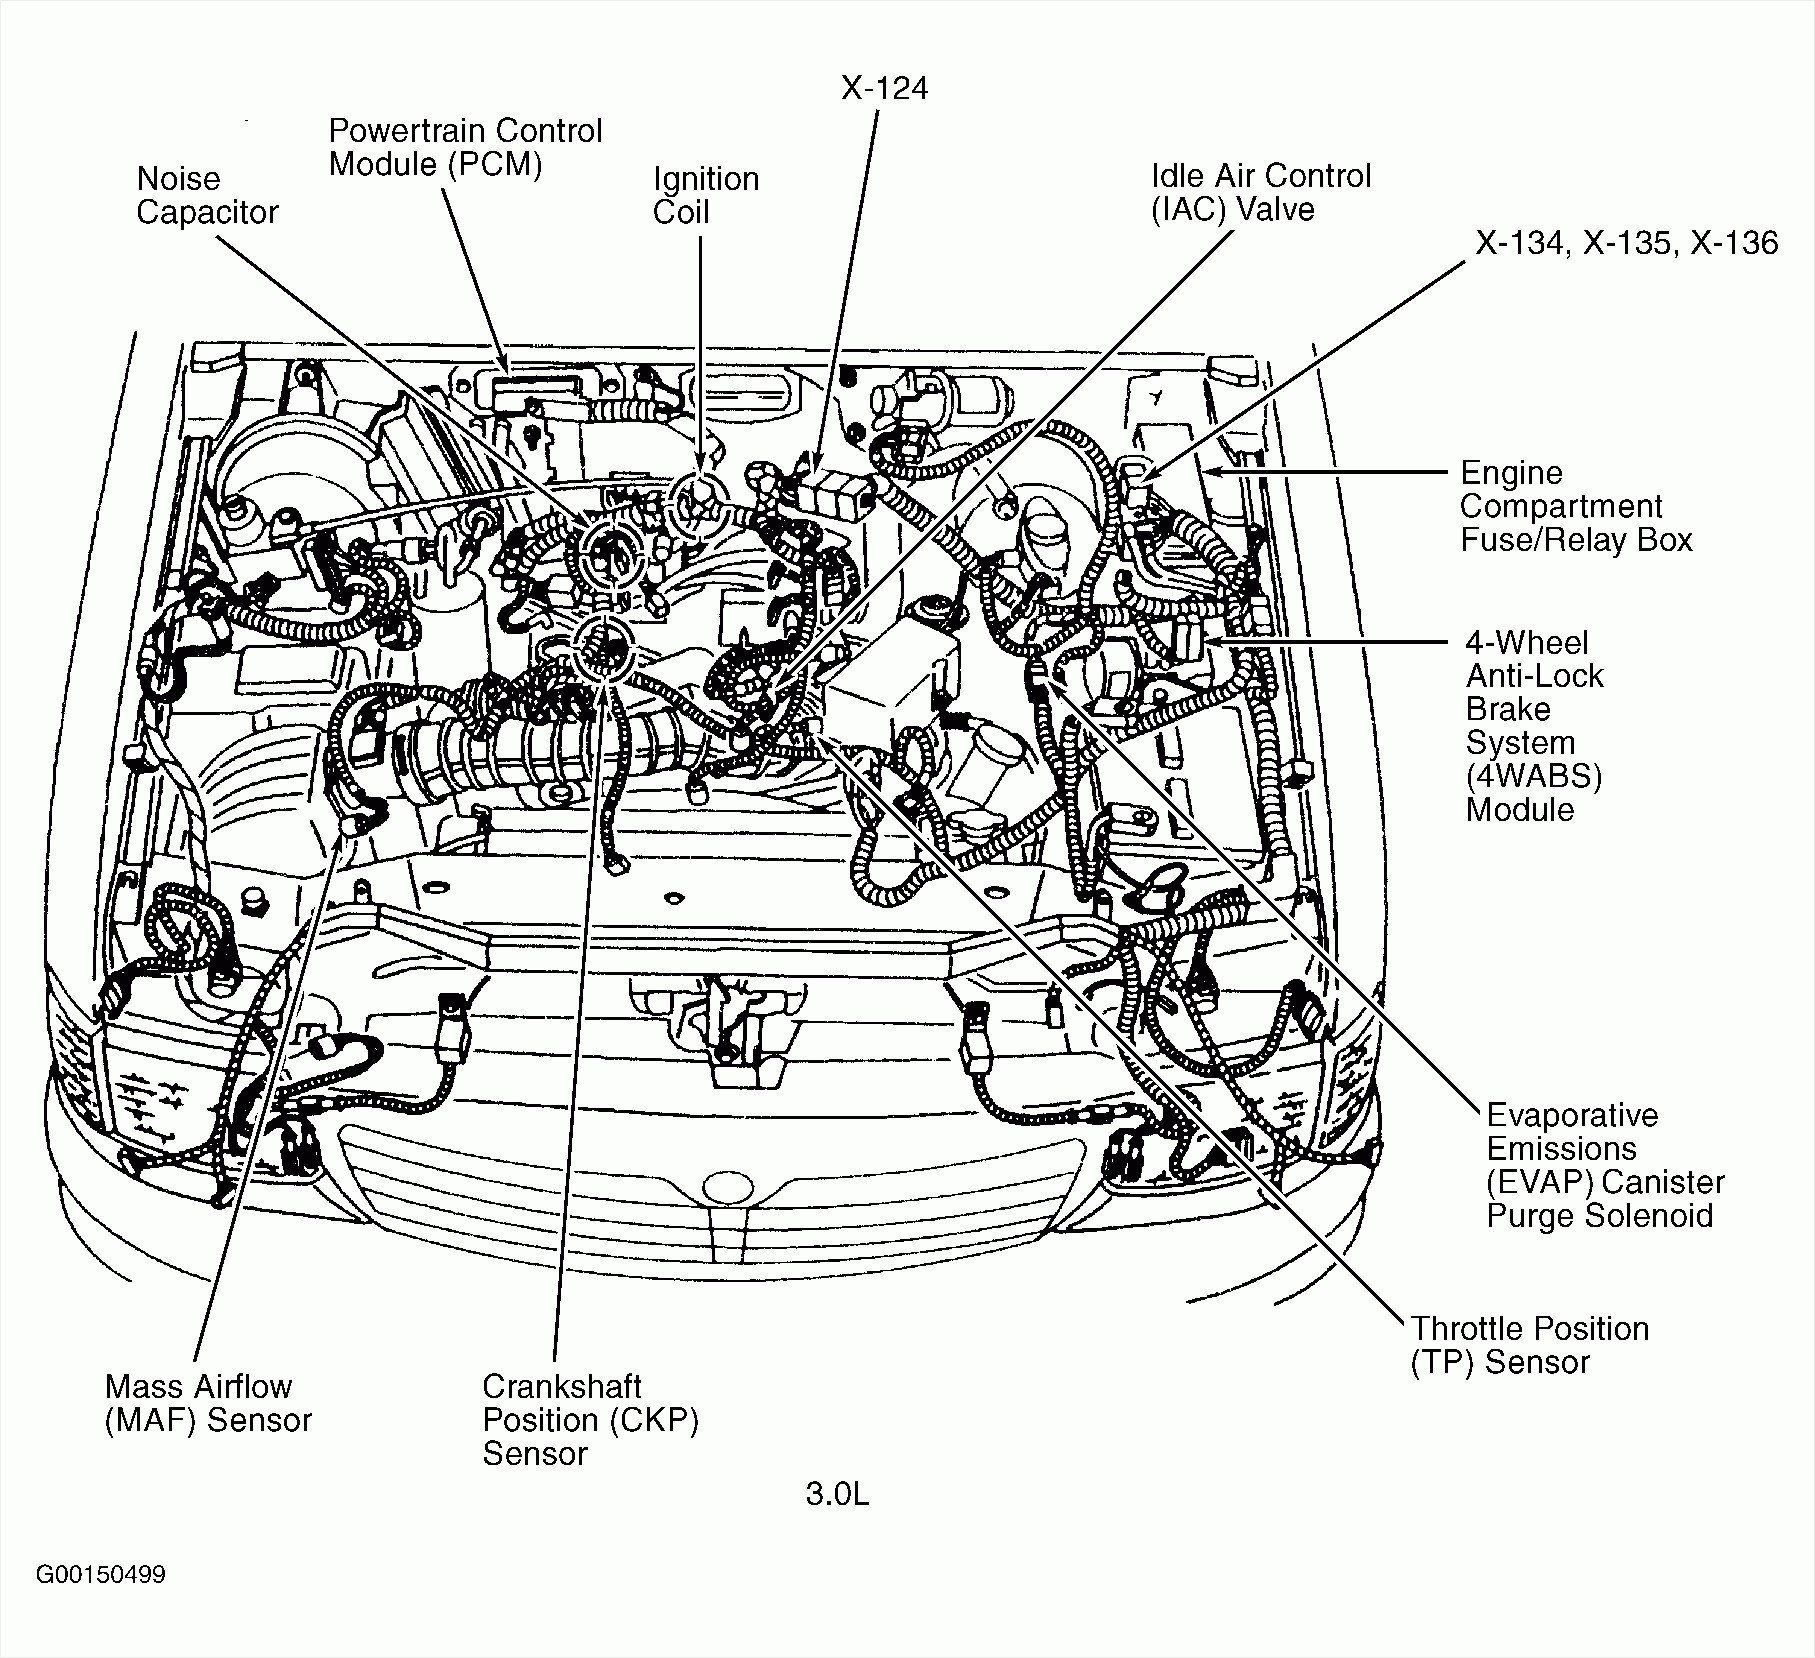 2000 Gmc sonoma Engine Diagram 91 Mazda Protege Engine Diagram Wiring Diagram Instruct Of 2000 Gmc sonoma Engine Diagram